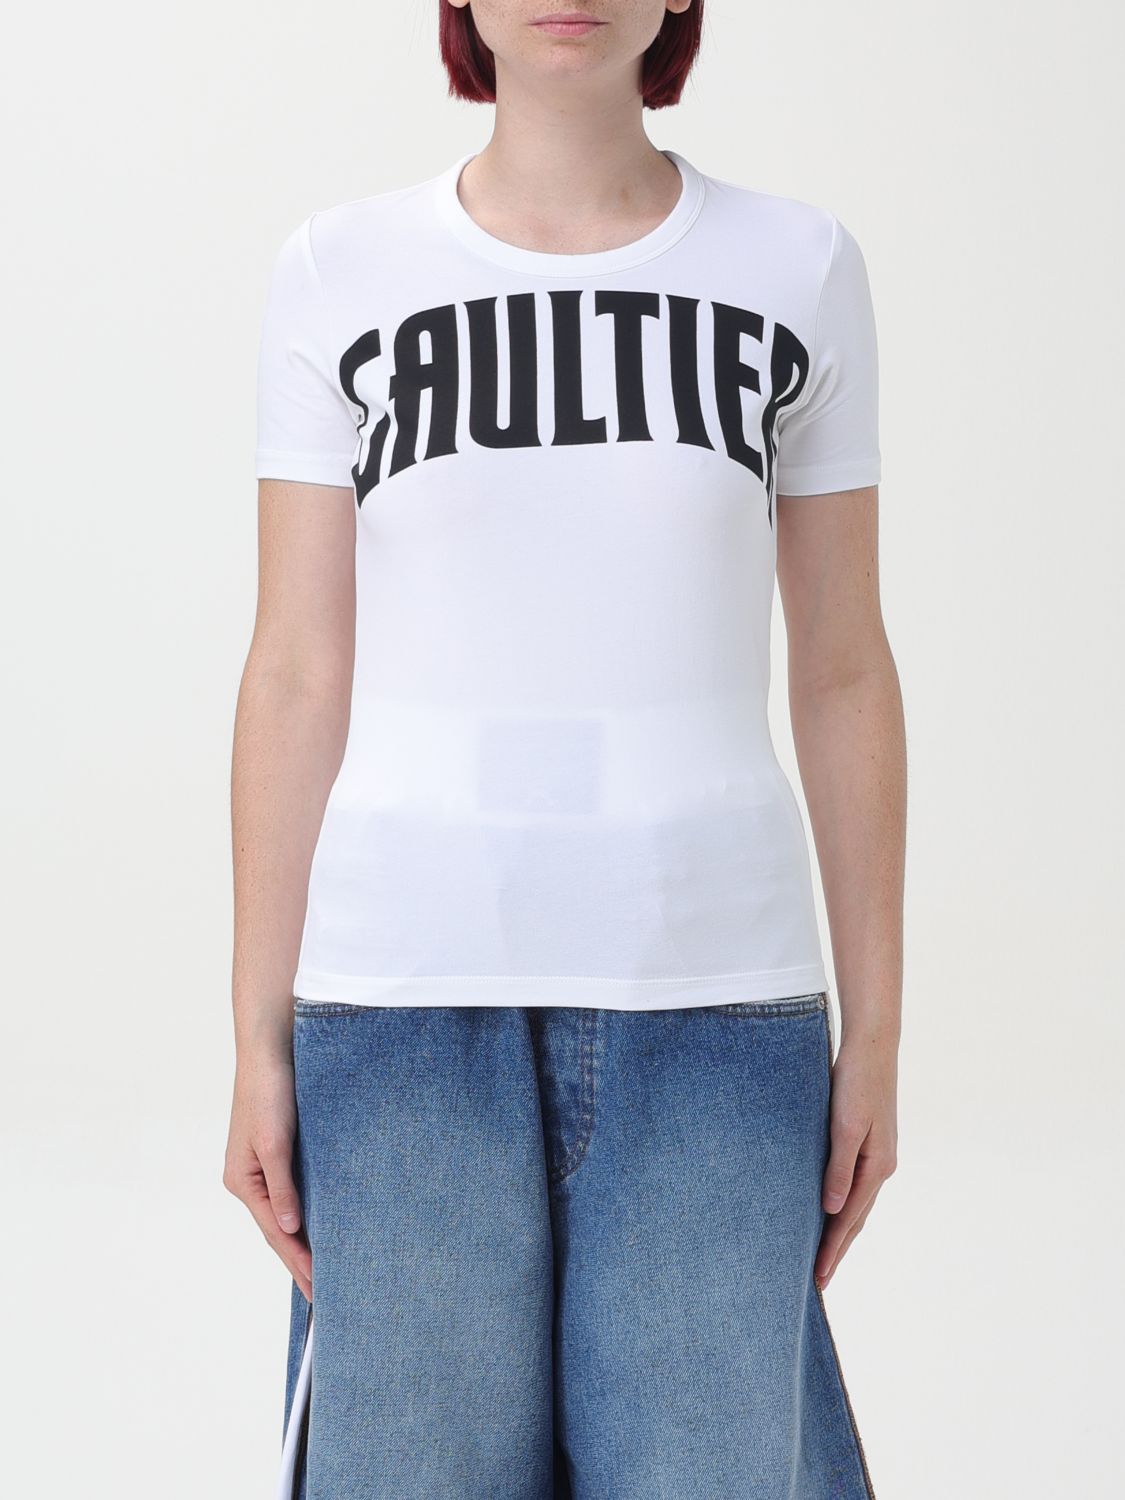 Jean Paul Gaultier T-Shirt JEAN PAUL GAULTIER Woman color Black